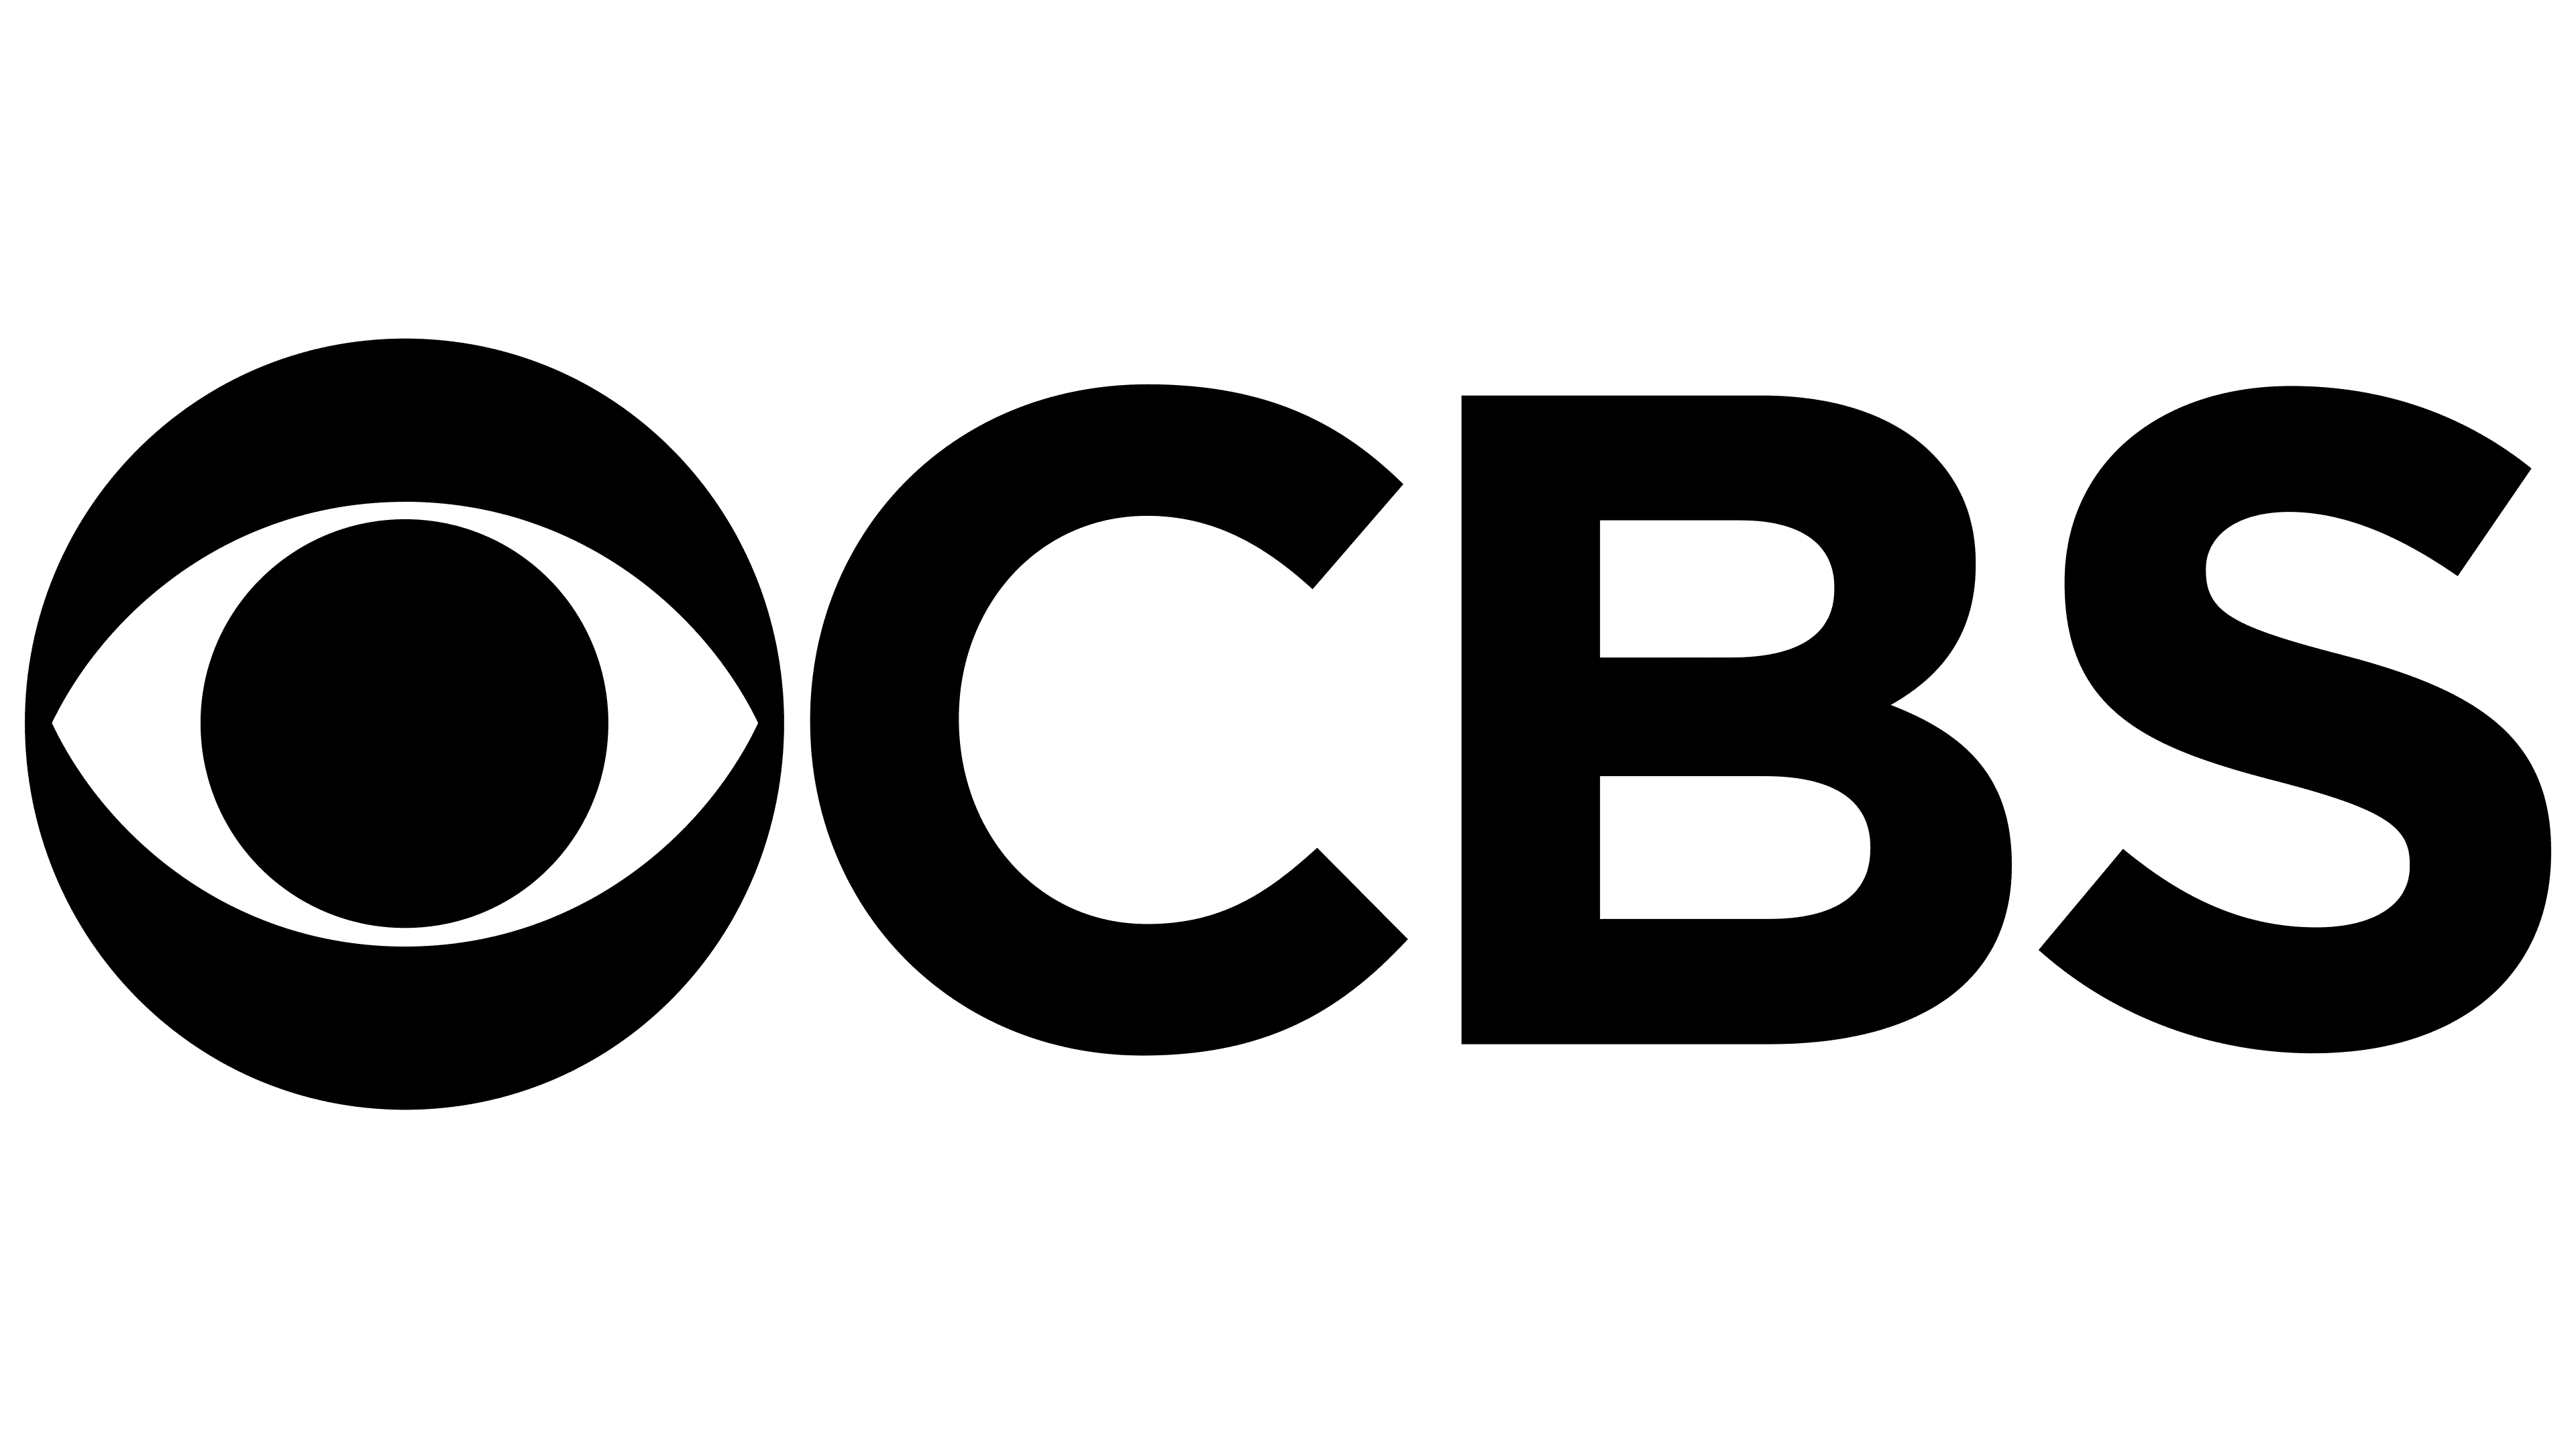 CBS-Emblem